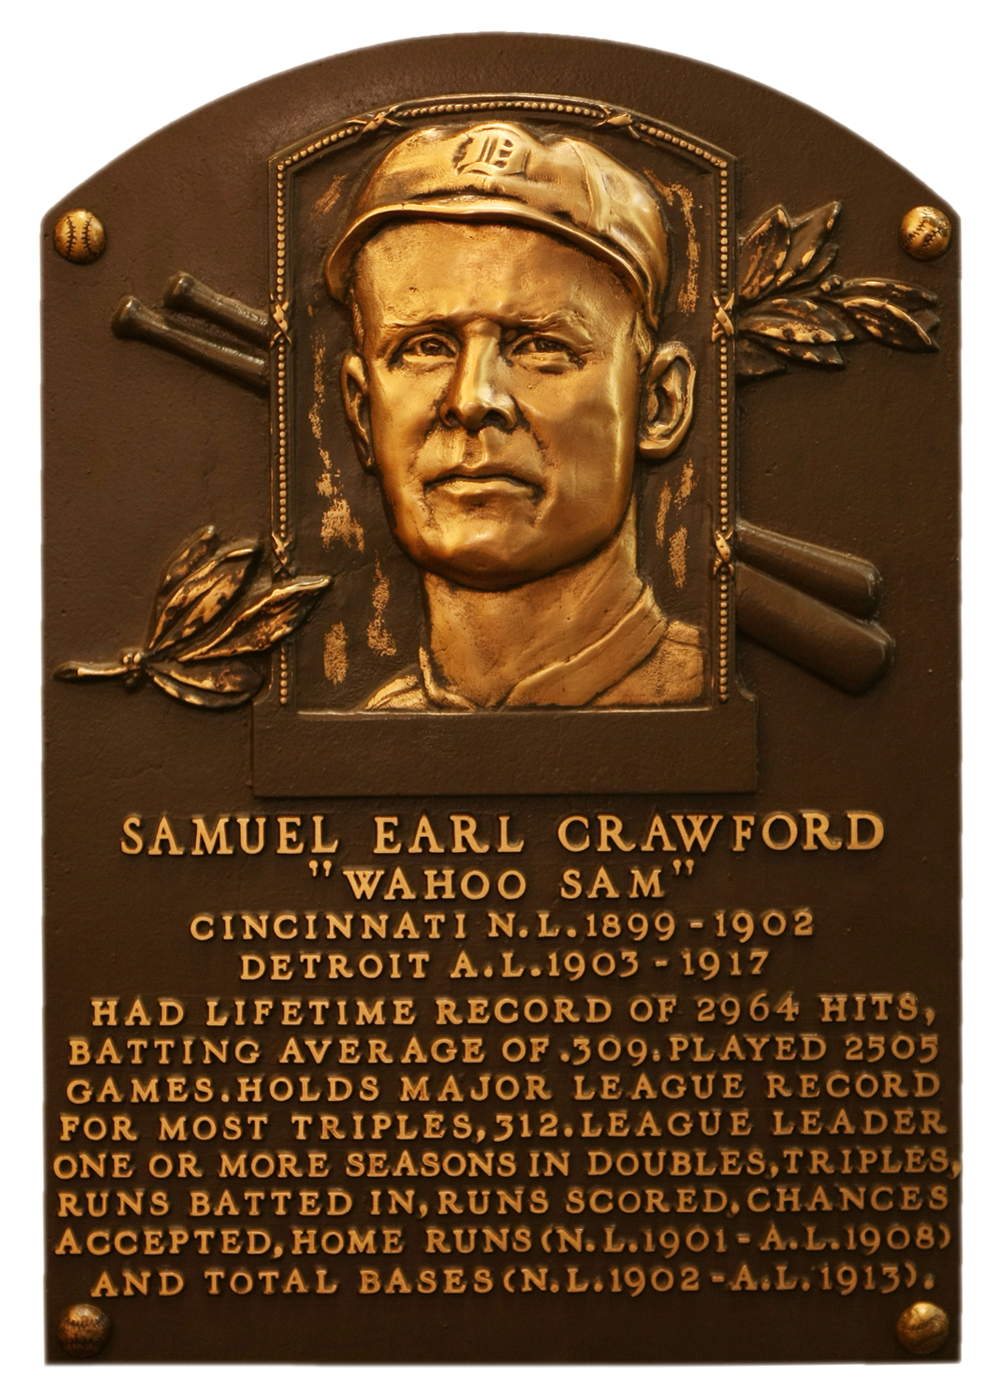 Sam Crawford Hall of Fame plaque